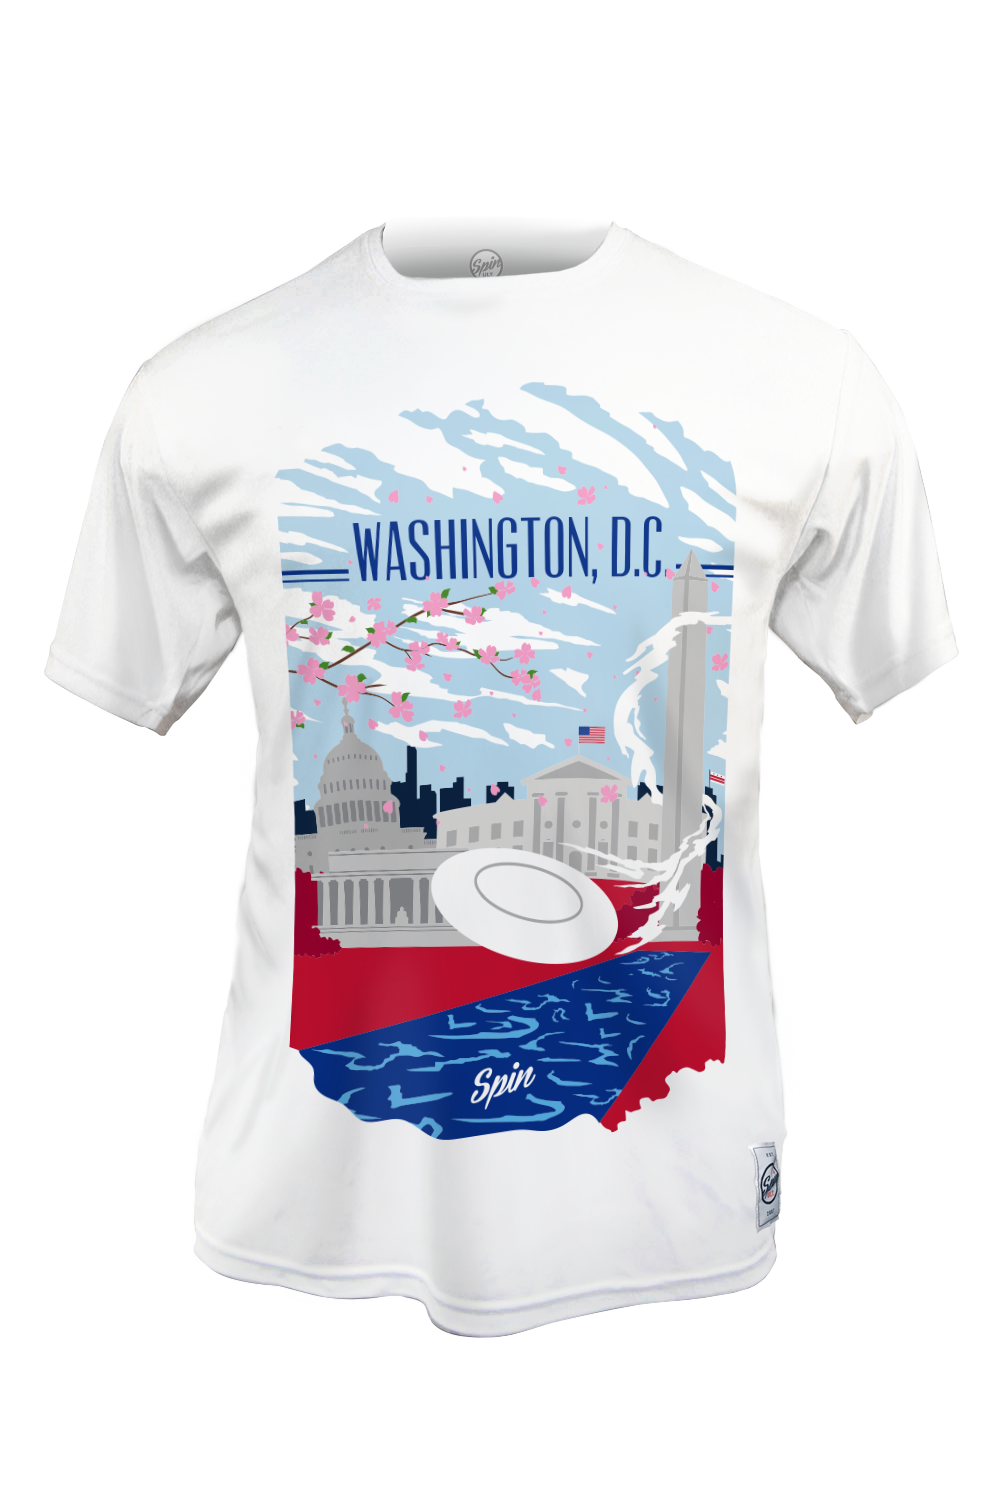 Washington D.C. Short Sleeve Jersey – Spin Ultimate